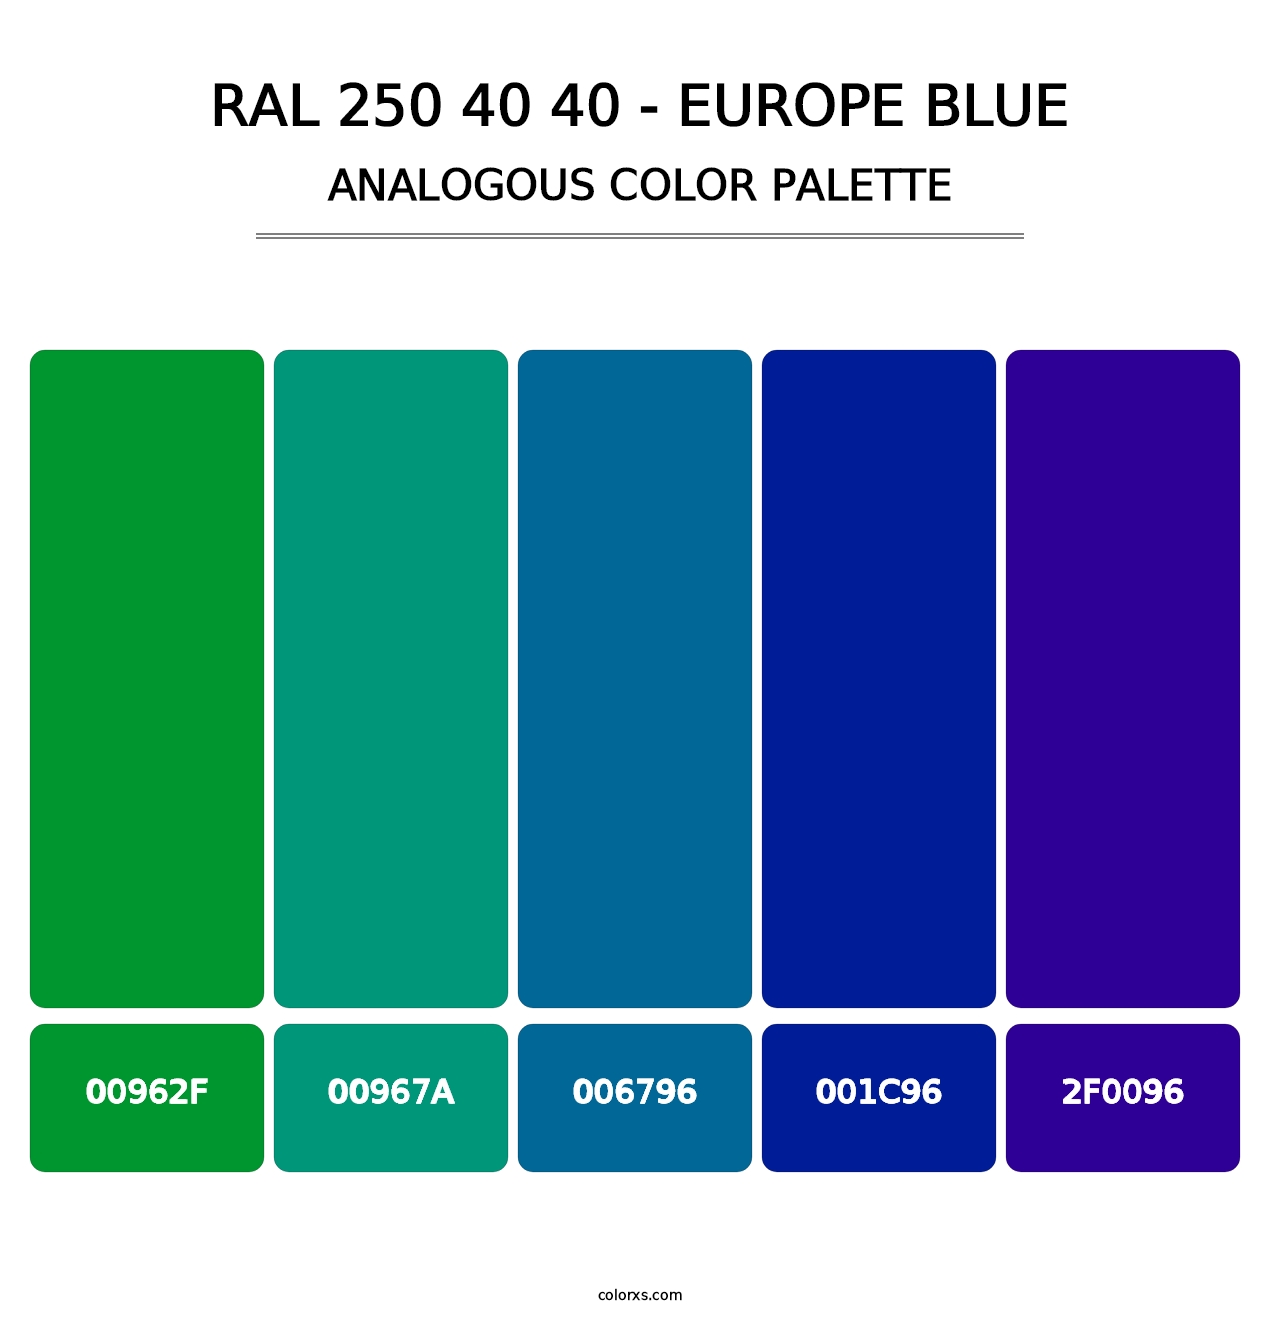 RAL 250 40 40 - Europe Blue - Analogous Color Palette